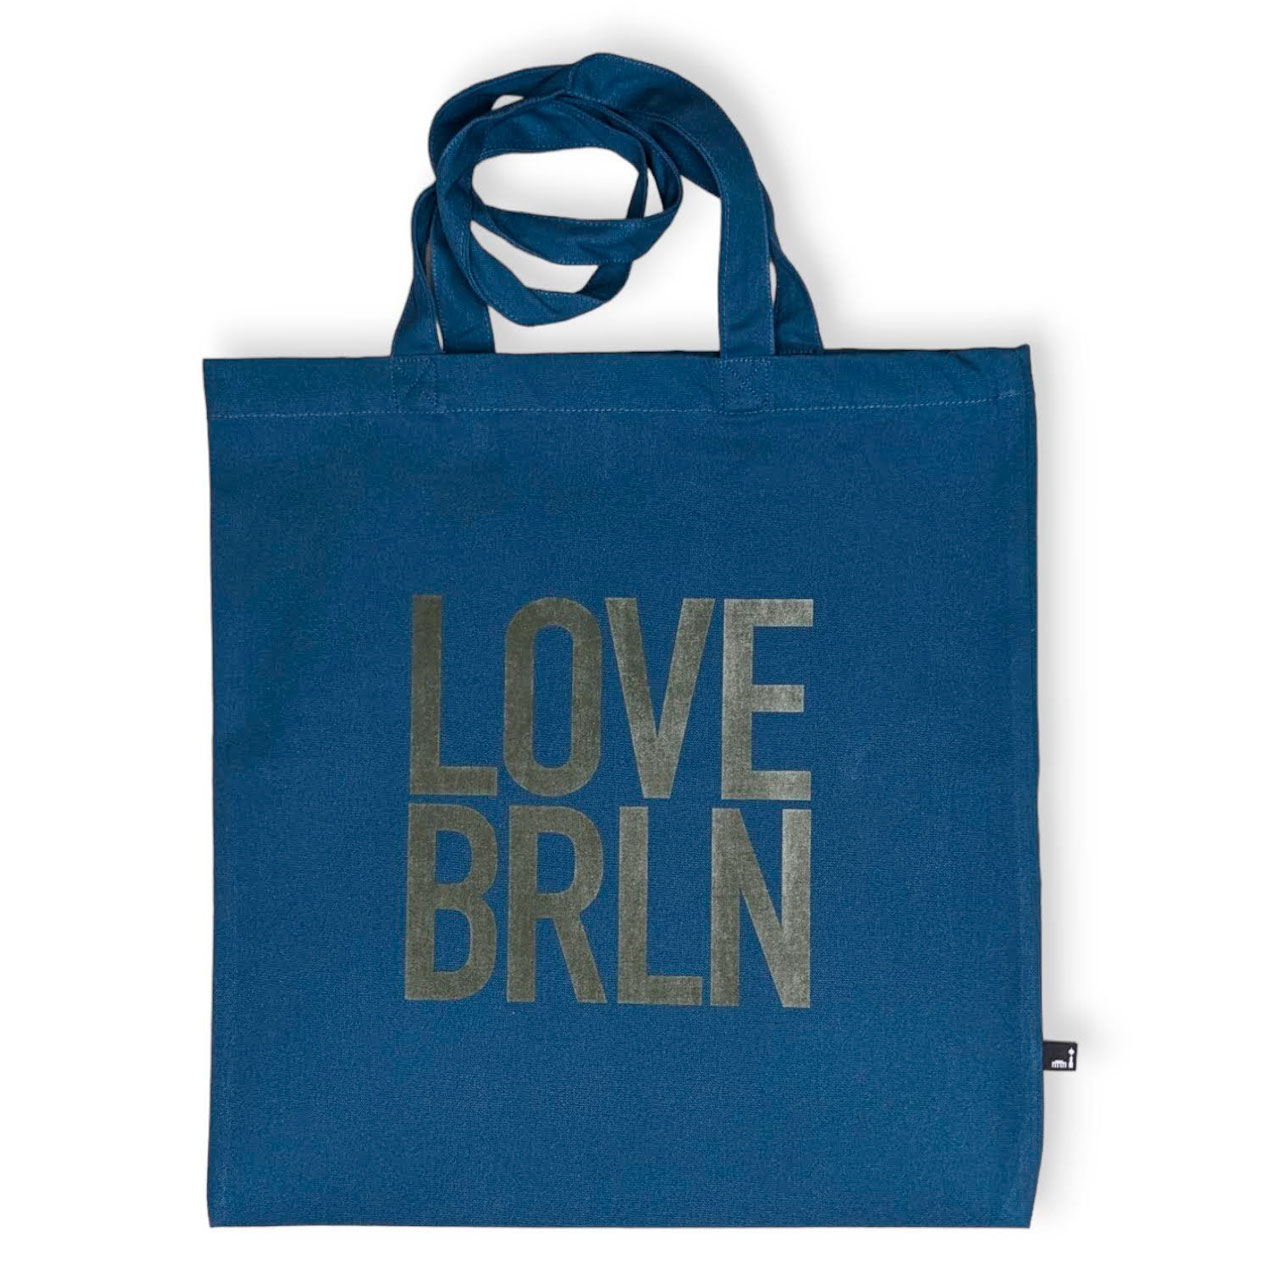 Love Berlin Canvas Bag blau/olive